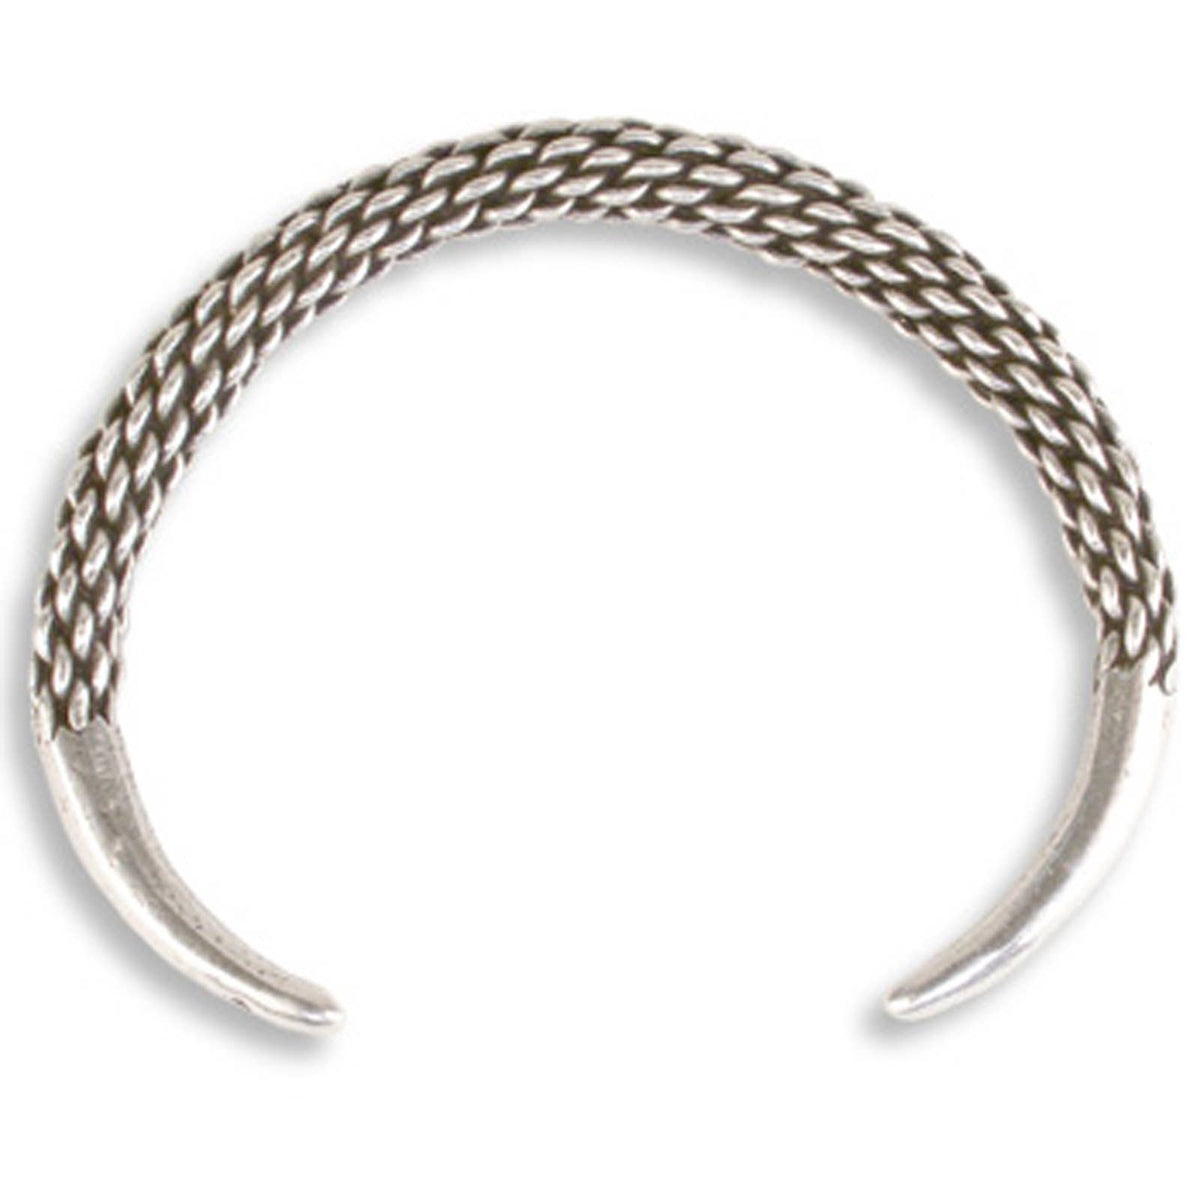 Viking Braided Cuff Bracelet - Not Every Libra